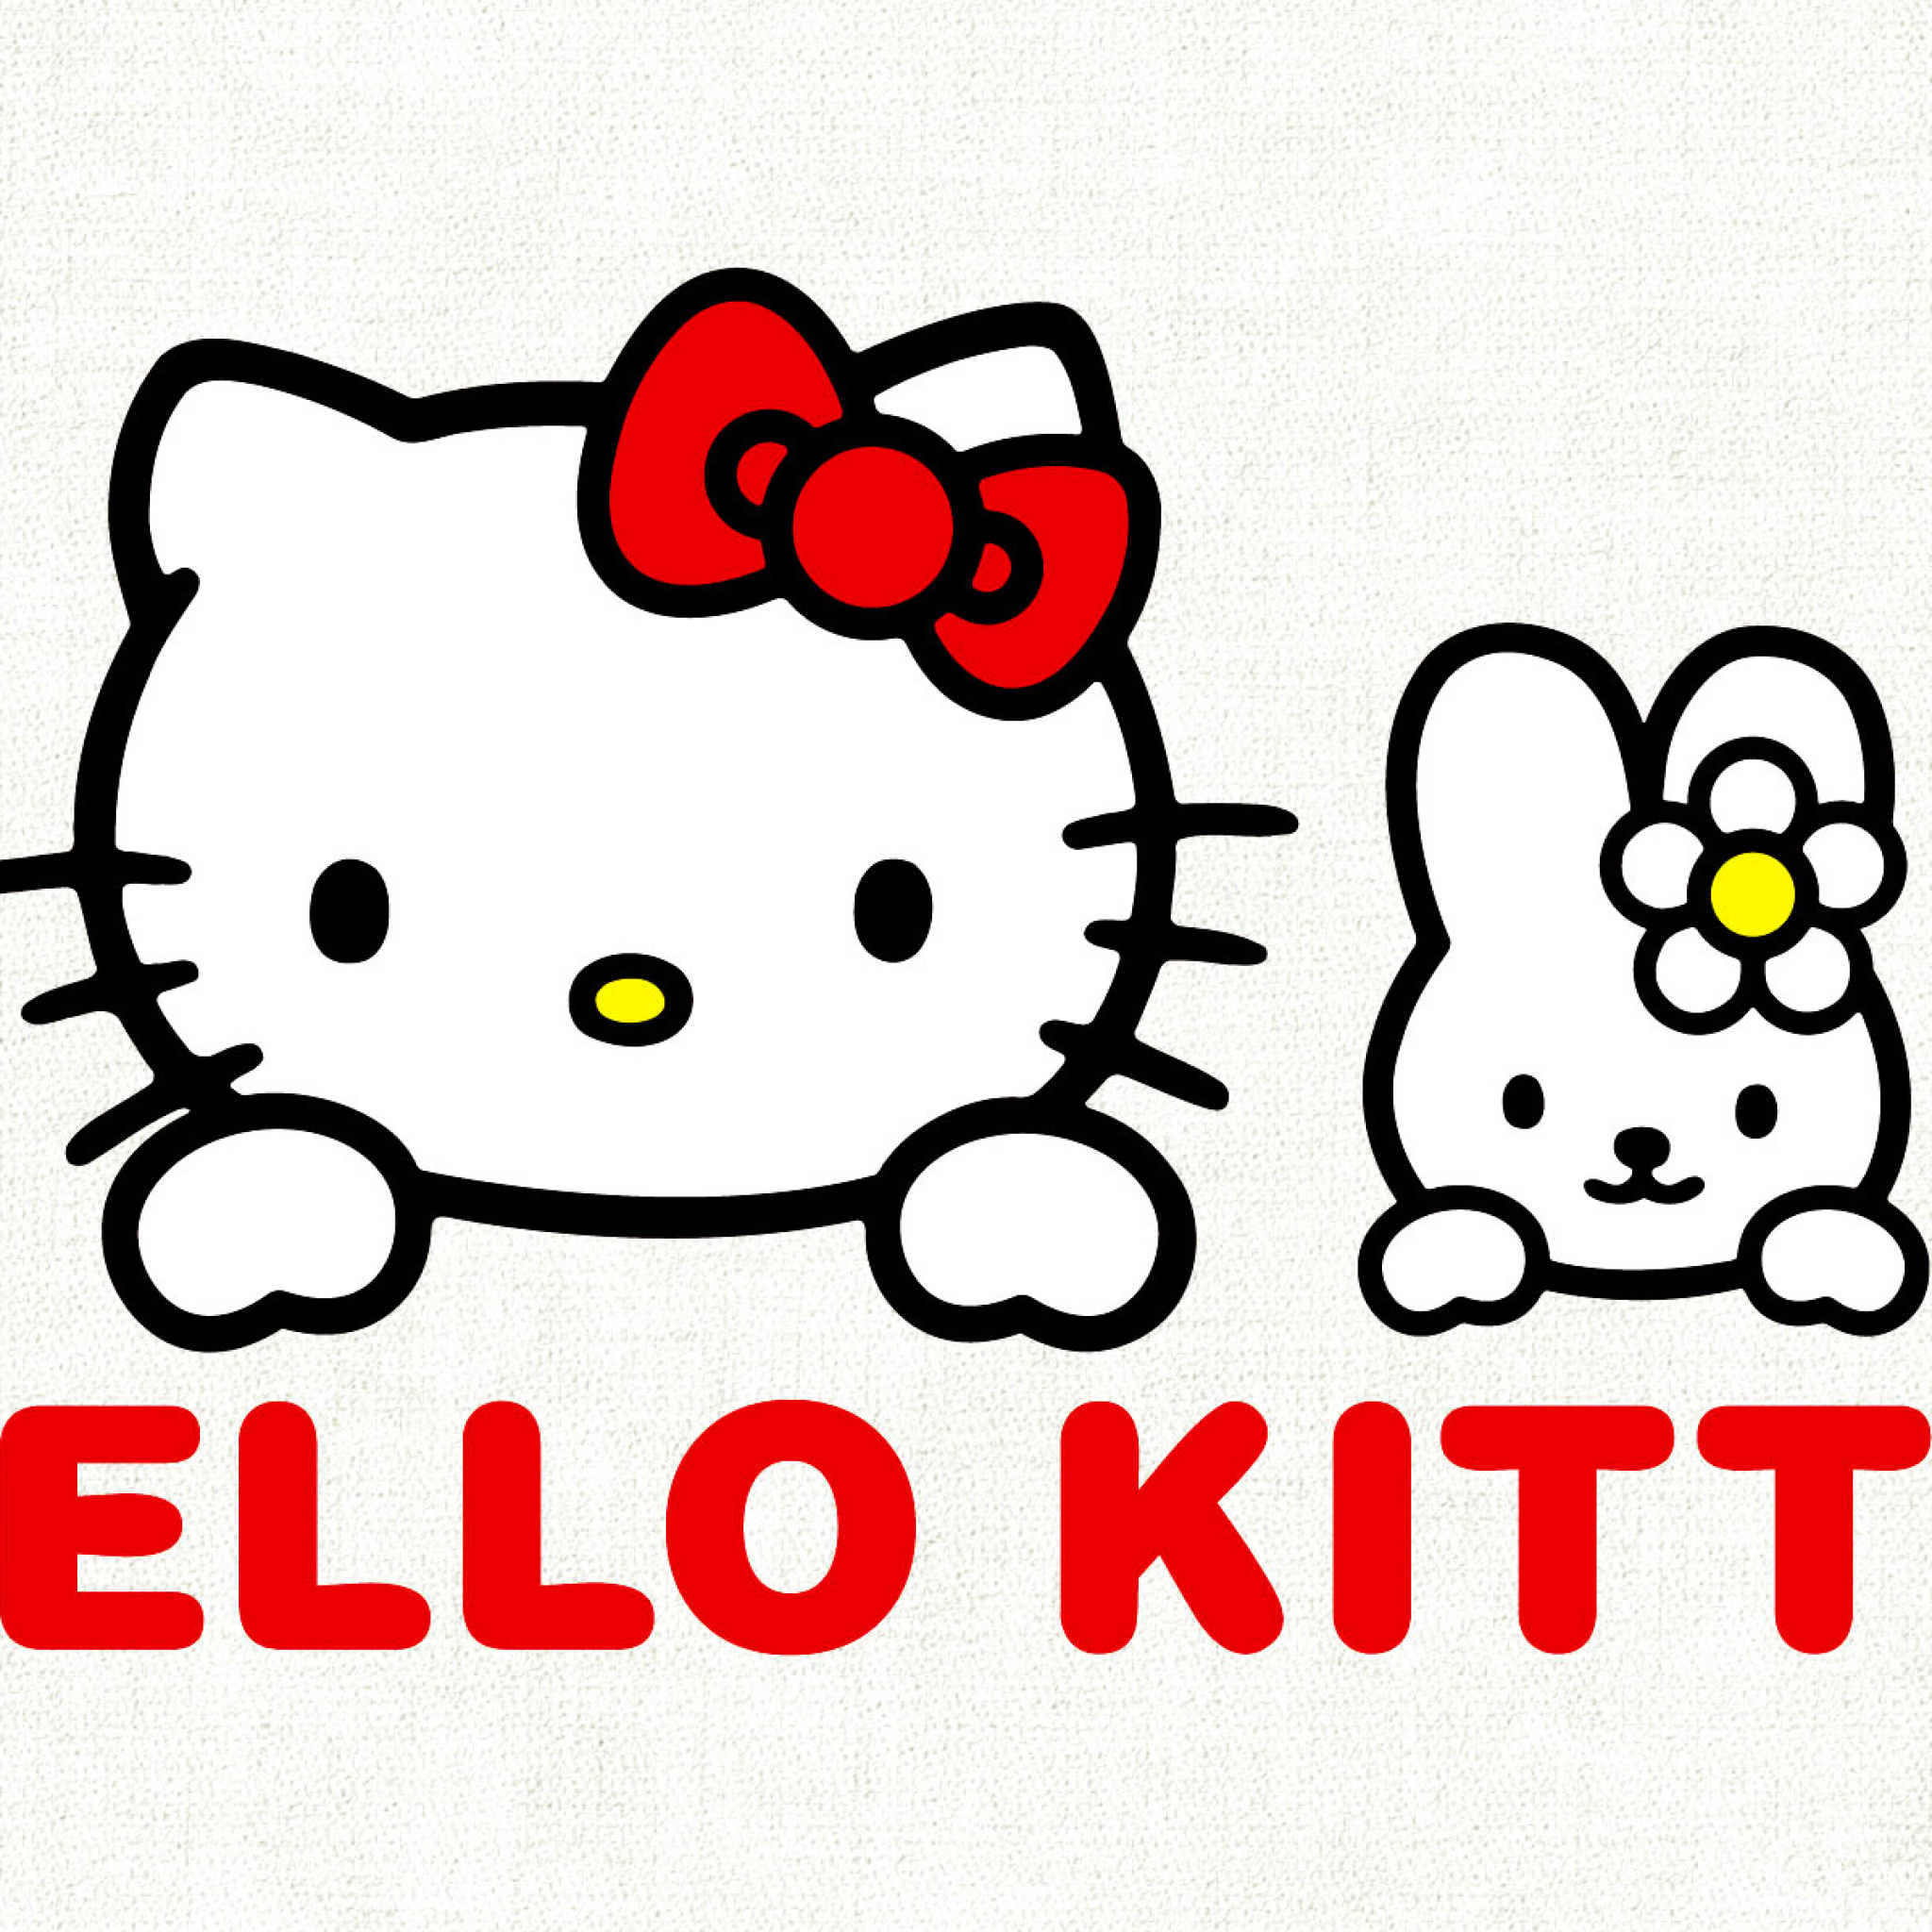 Das Hello Kitty Wallpaper 2048x2048